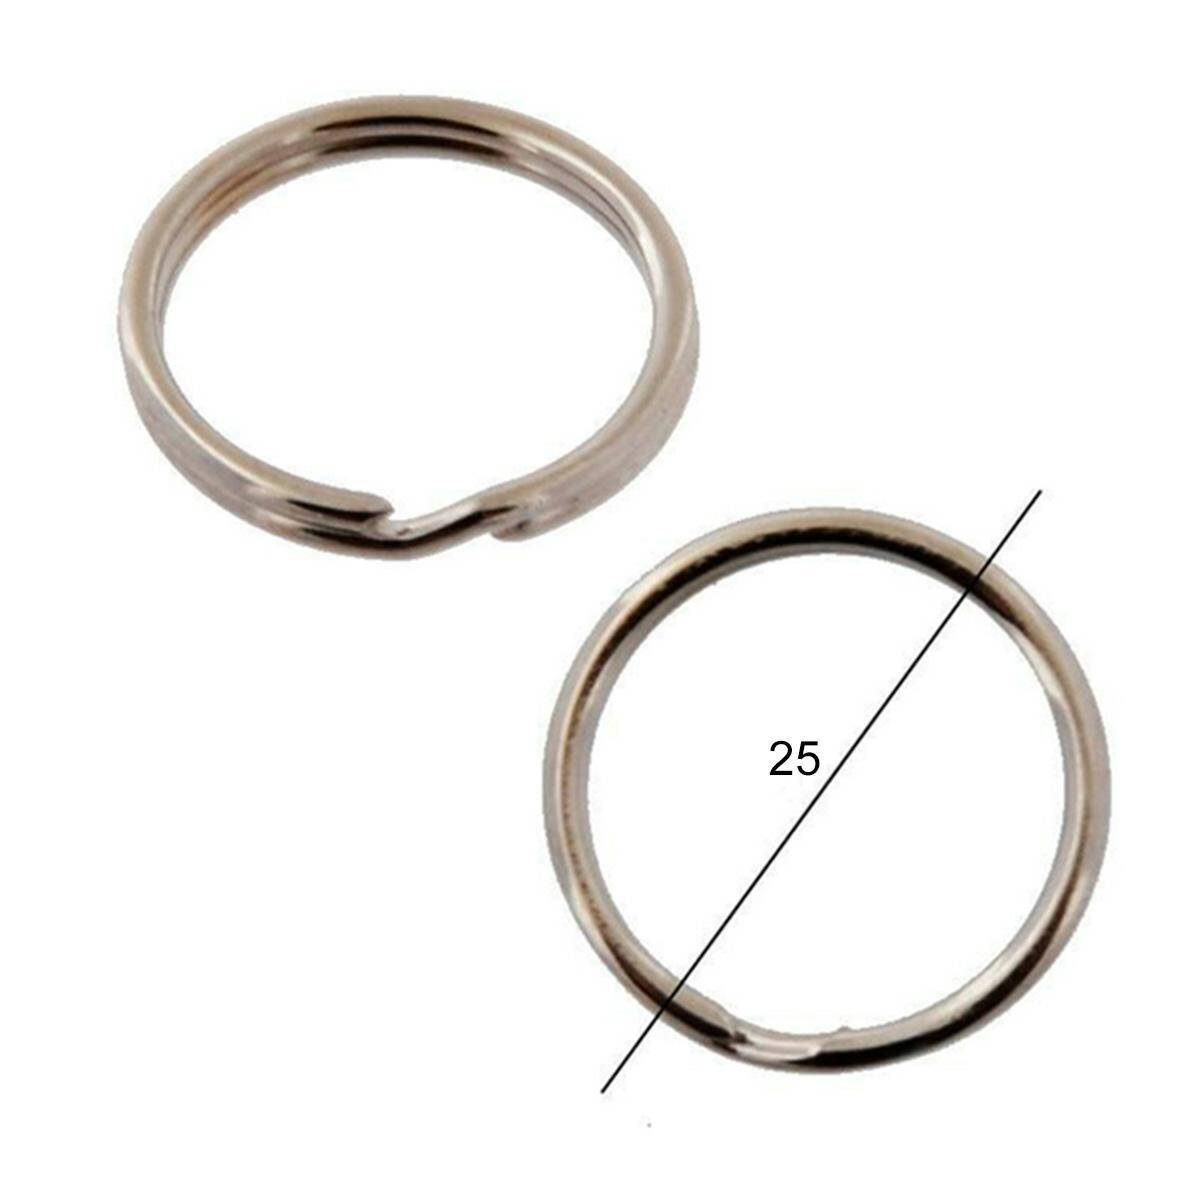 Key rings - 25mm